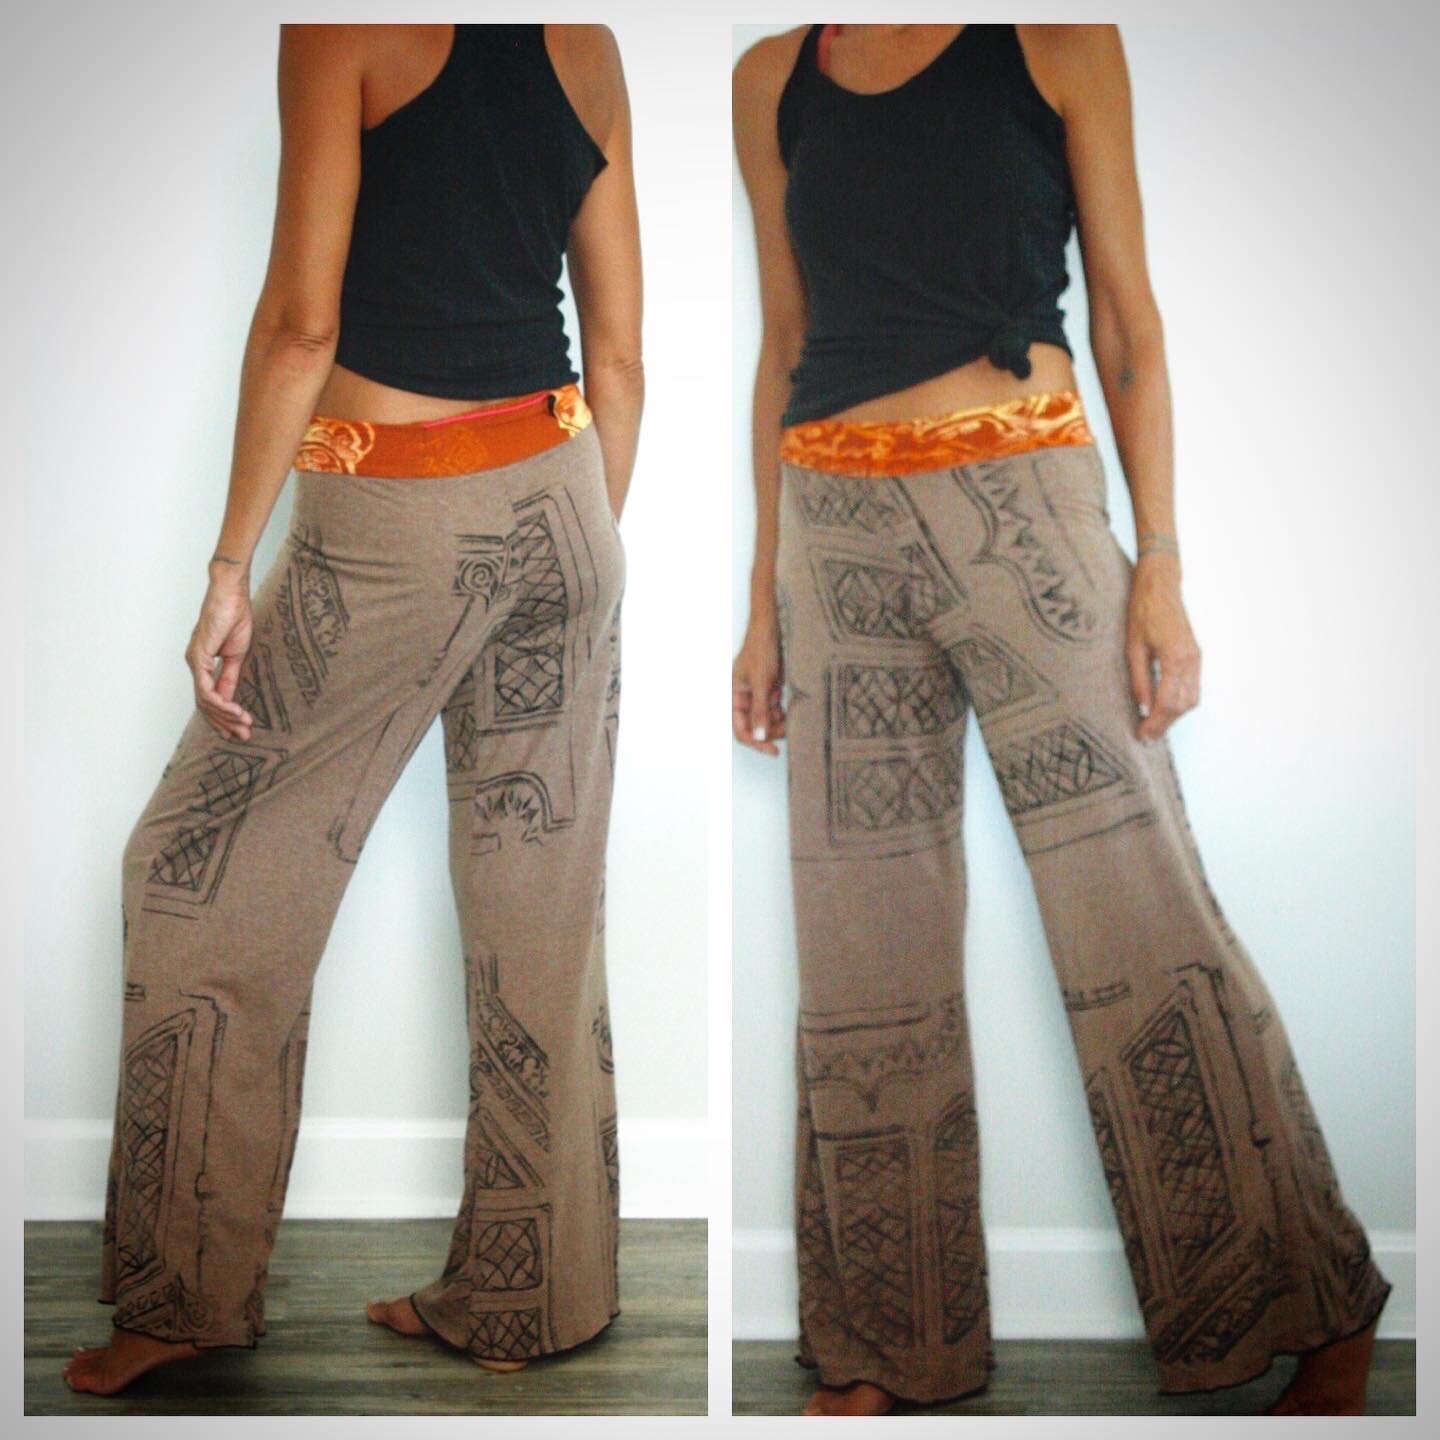 Palmetto Yoga Pants, collection 2020